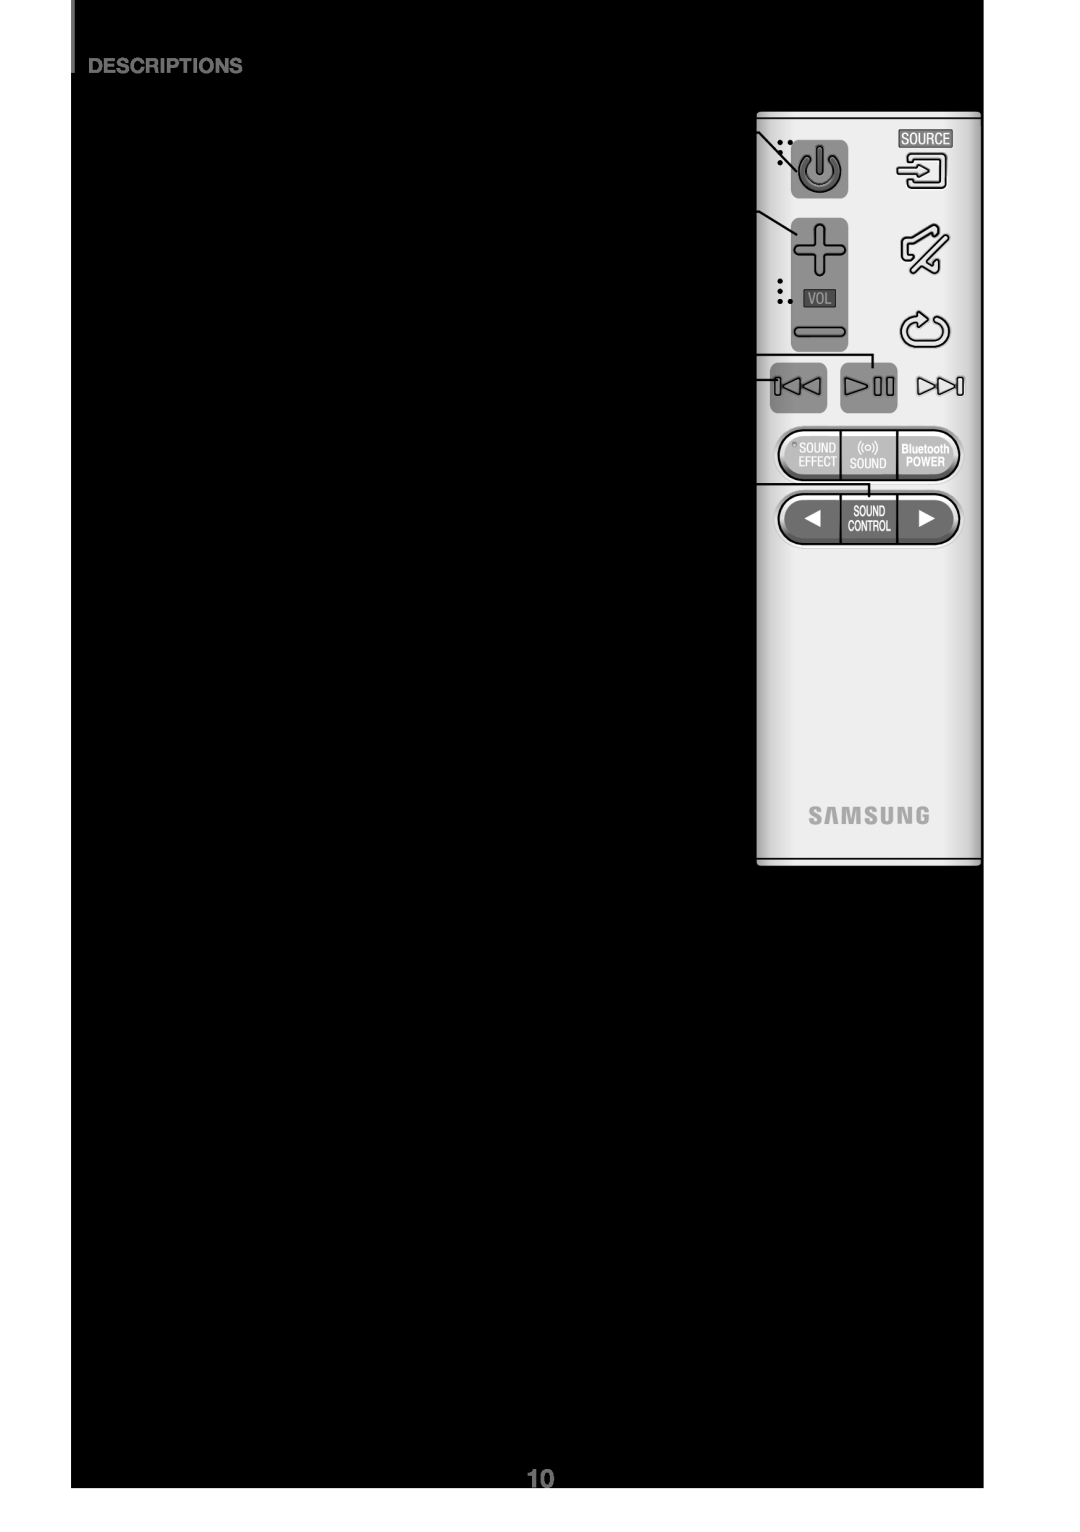 Samsung HW-J450/ZF, HW-K450/EN, HW-J450/EN, HW-K450/ZF manual Descriptions, Power, Volume 